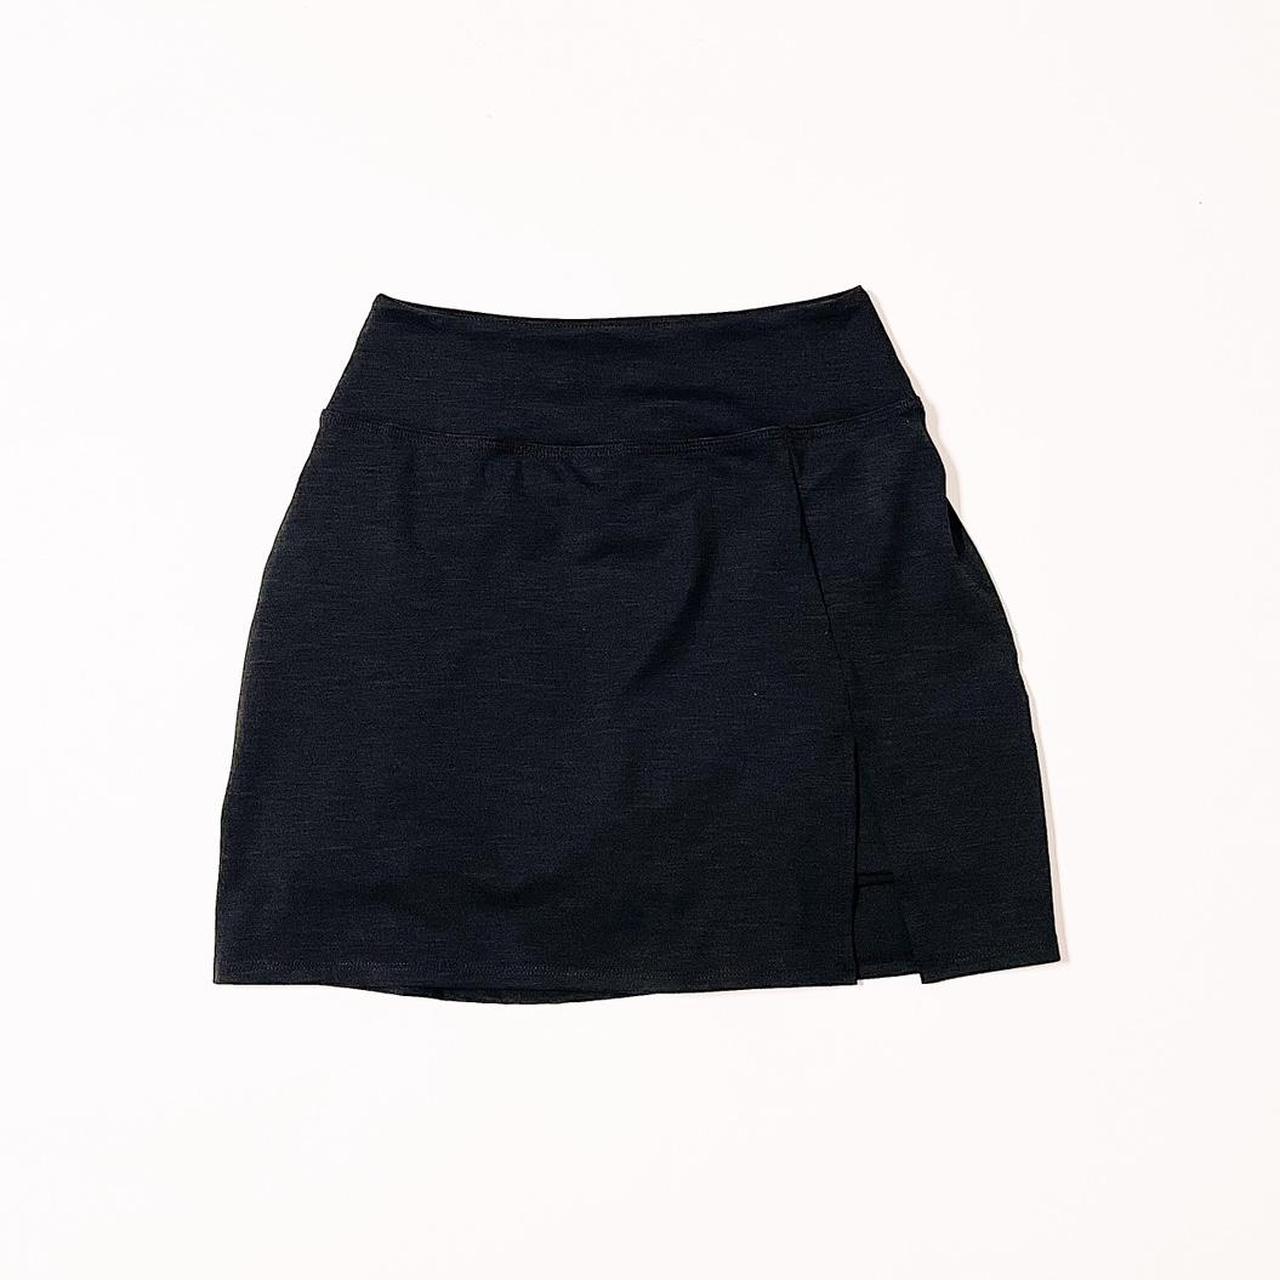 Beyond Yoga black mini skirt skort with slit and... - Depop